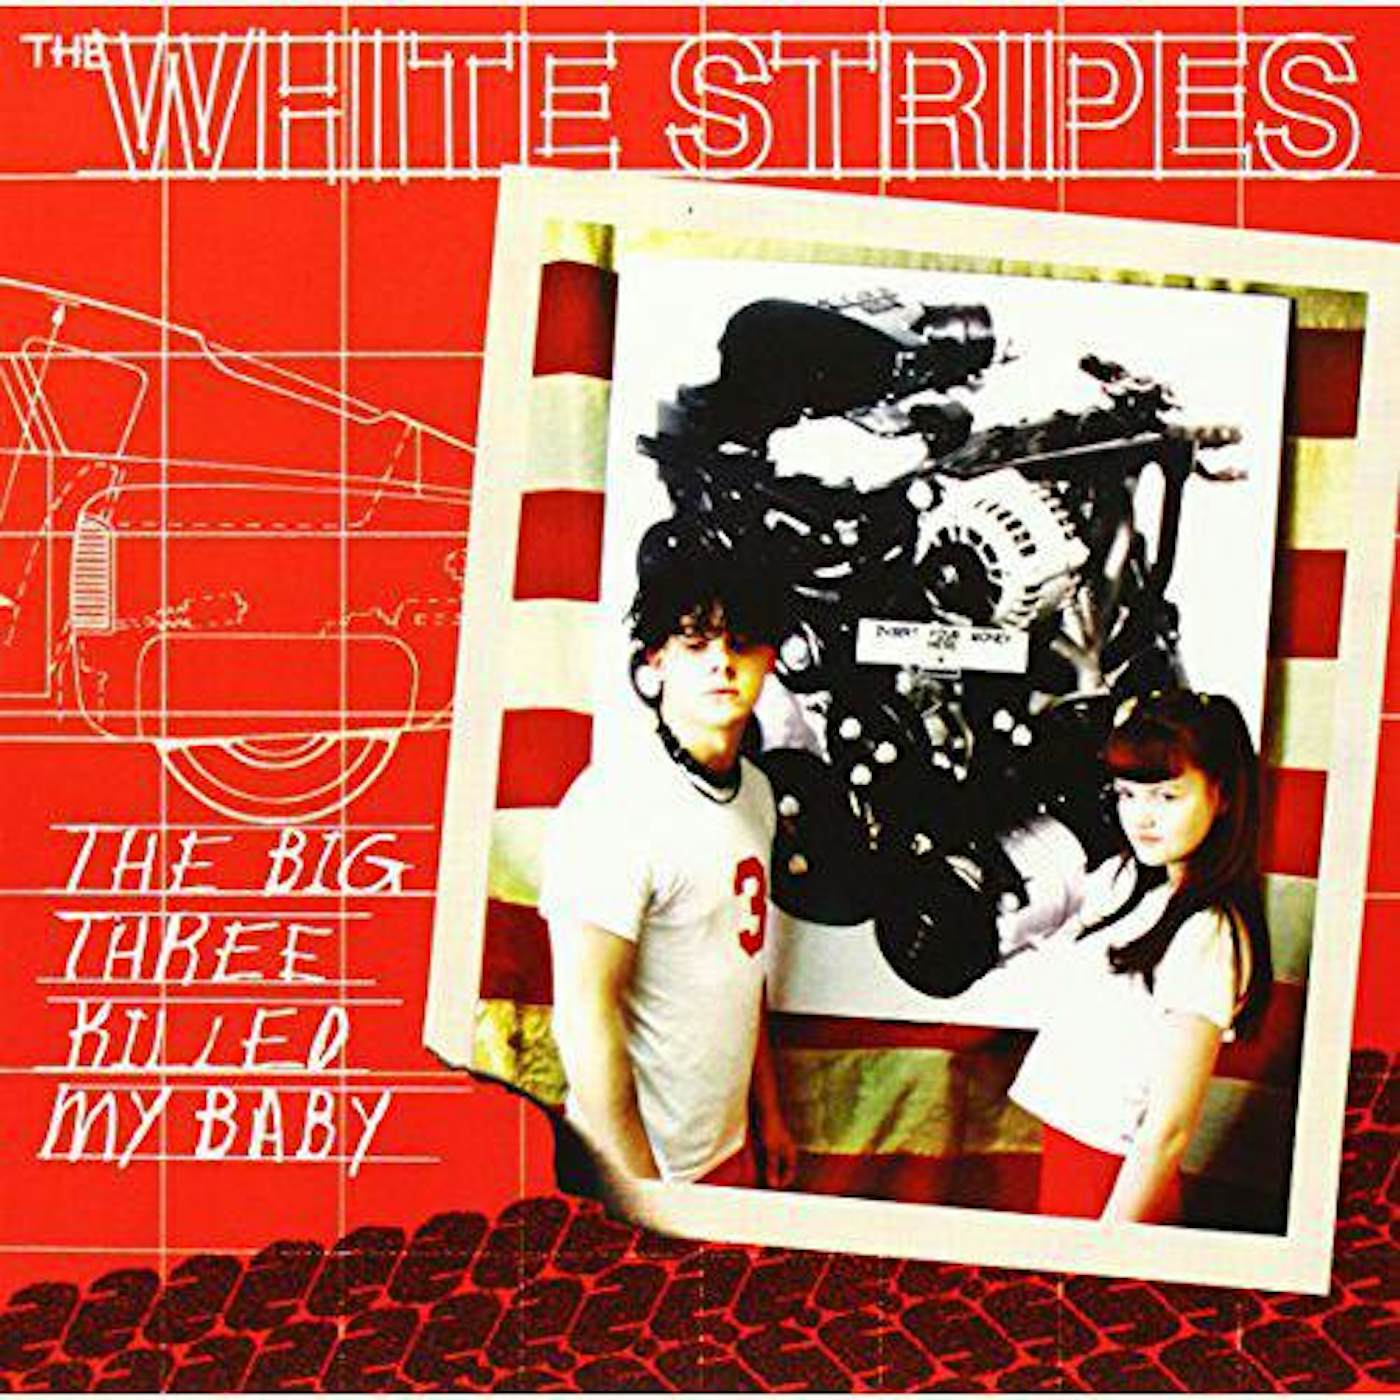 The White Stripes BIG THREE KILLED MY BABY / RED BOWLING BALL RUTH Vinyl Record